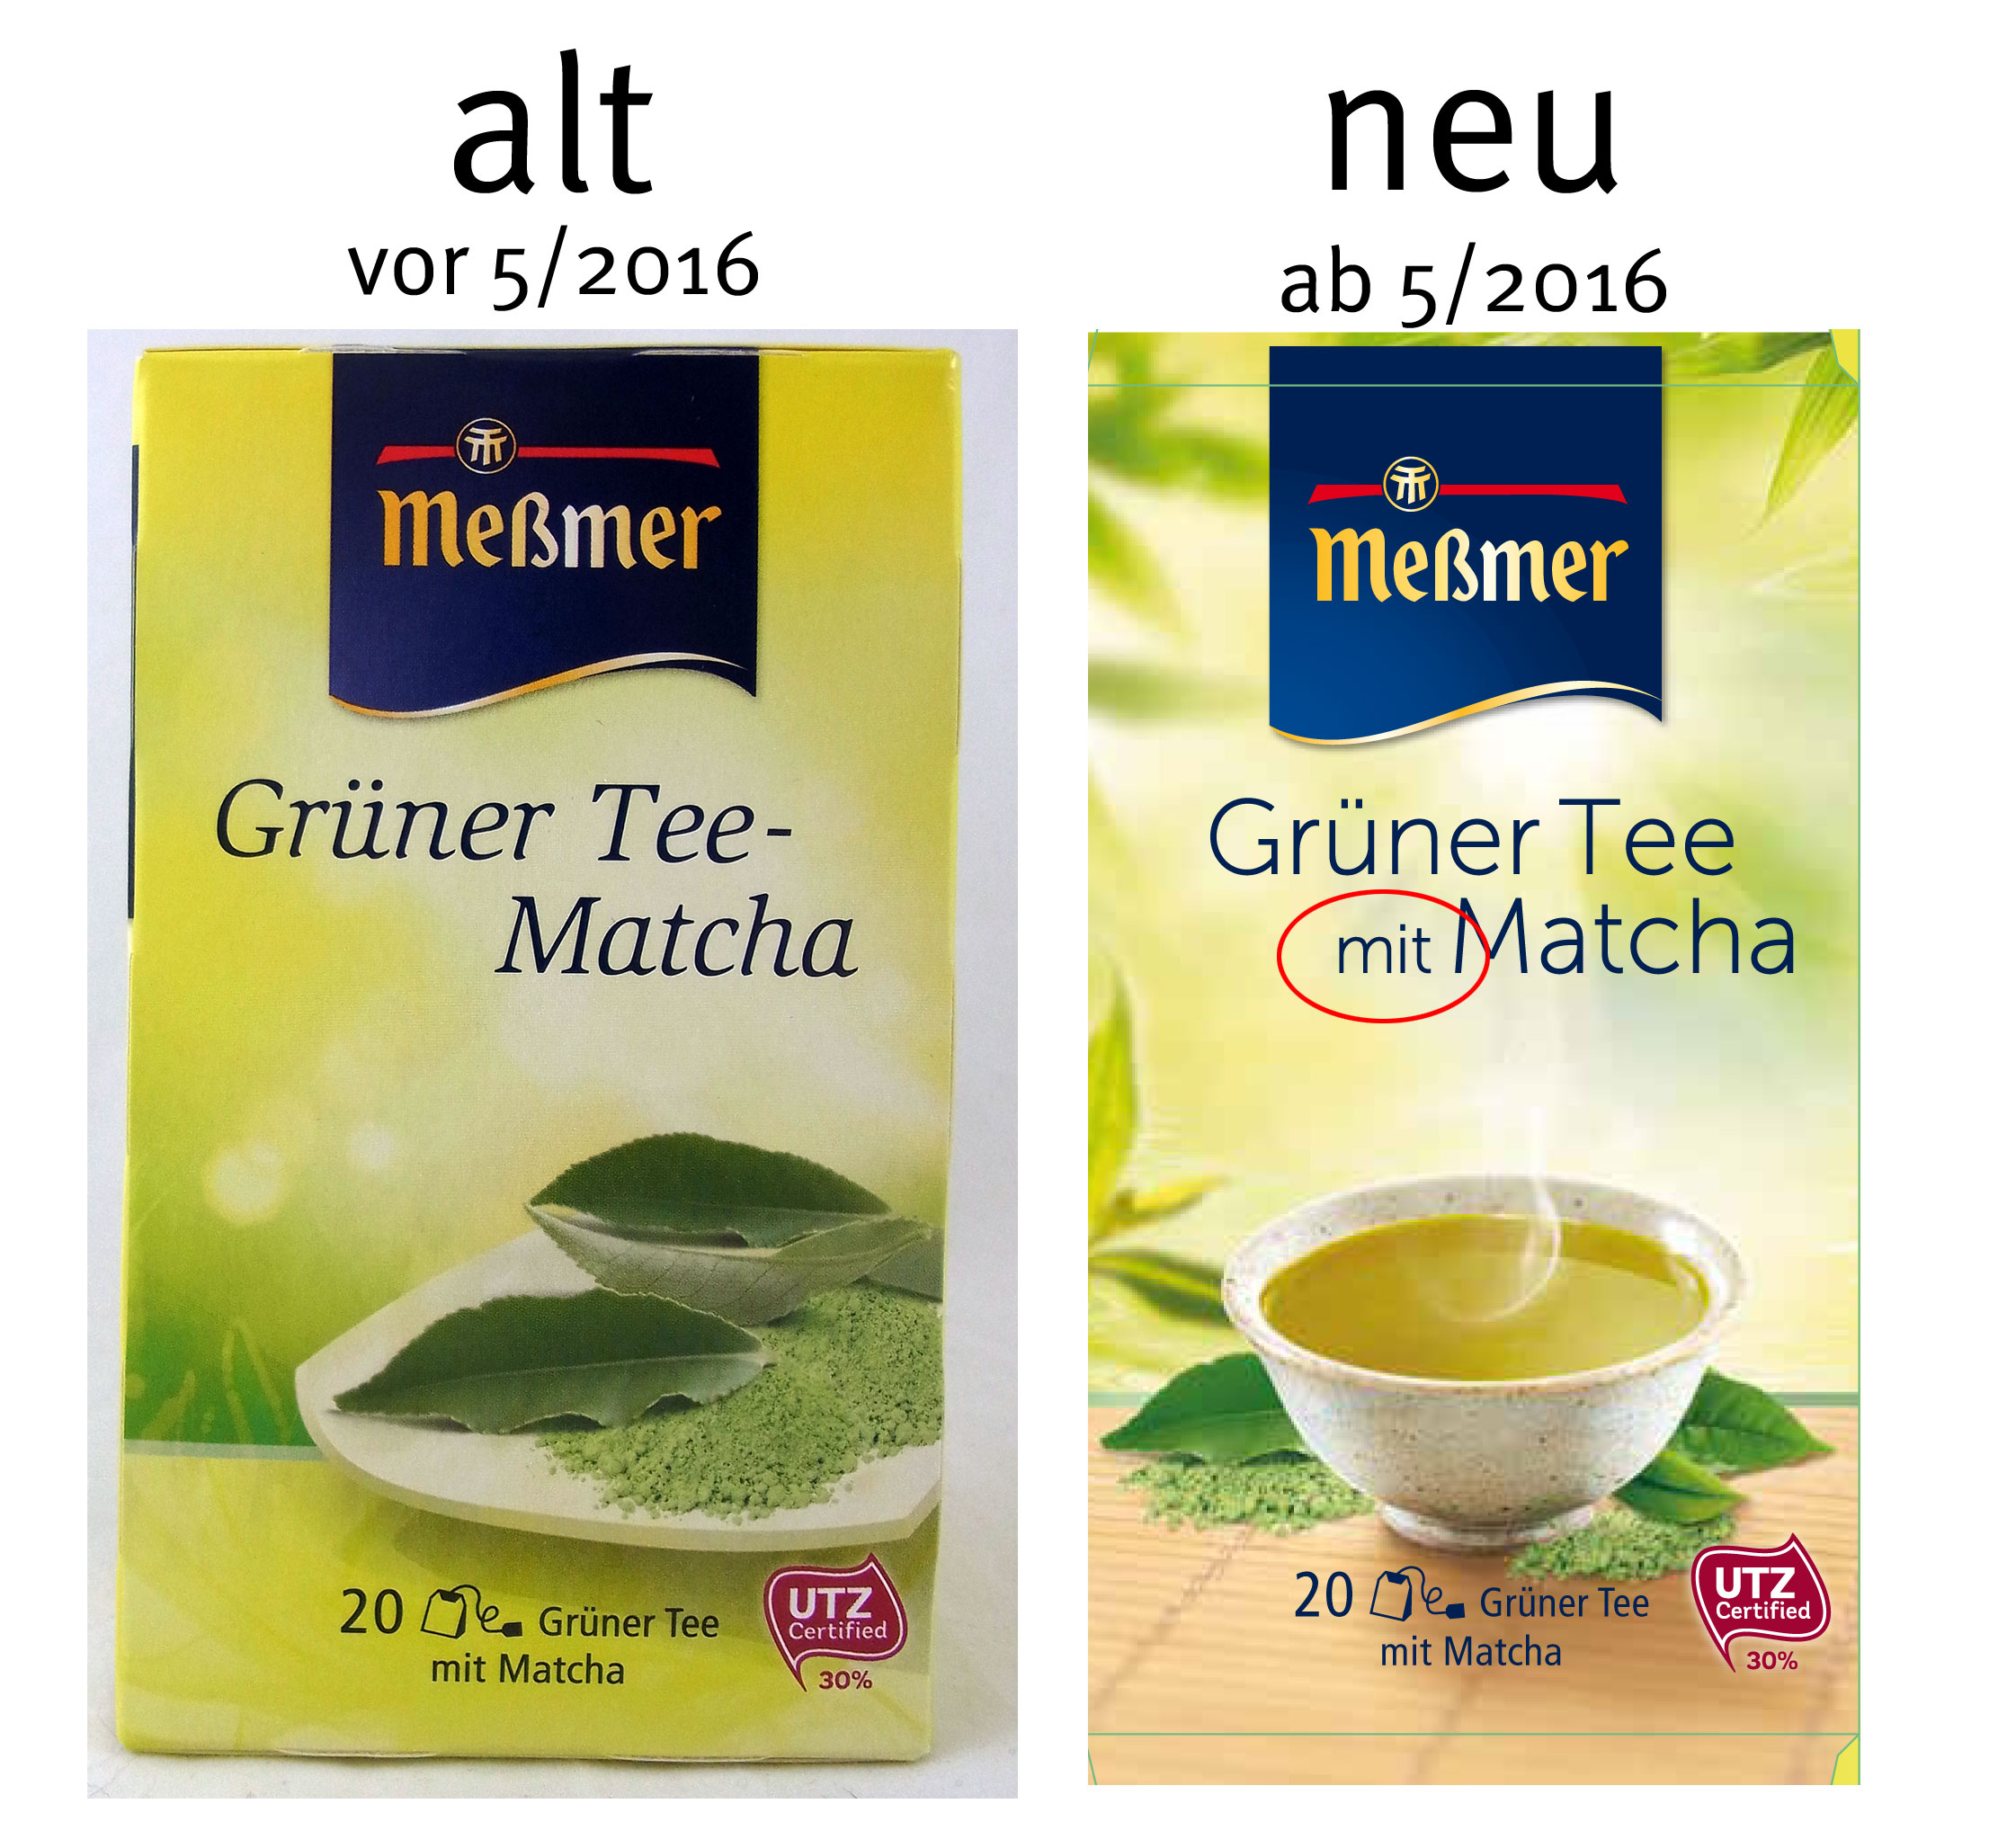 Meßmer, Grüner Tee mit Matcha, ehemals Meßmer Grüner Tee – Matcha